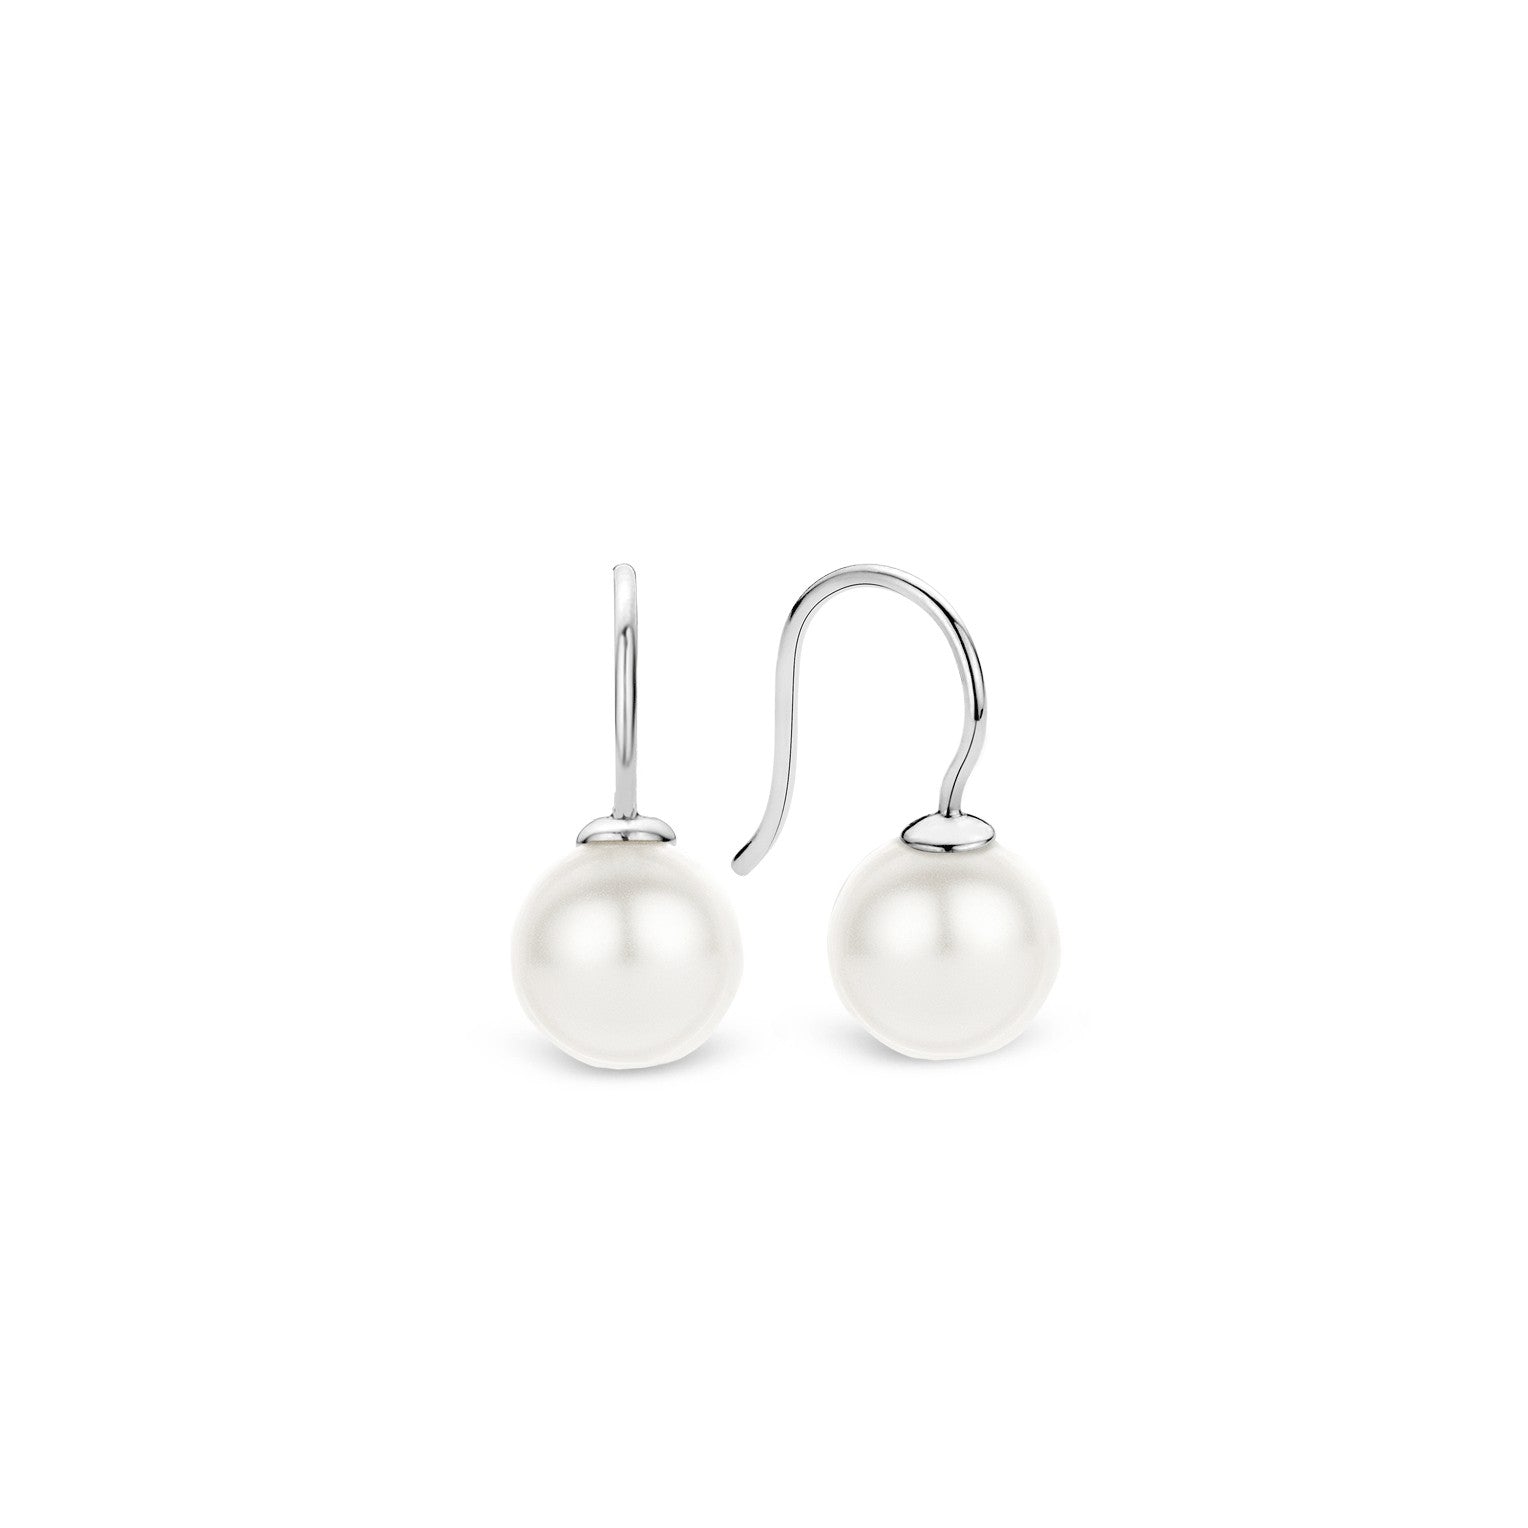 The Classic Pearl Dangle Earrings